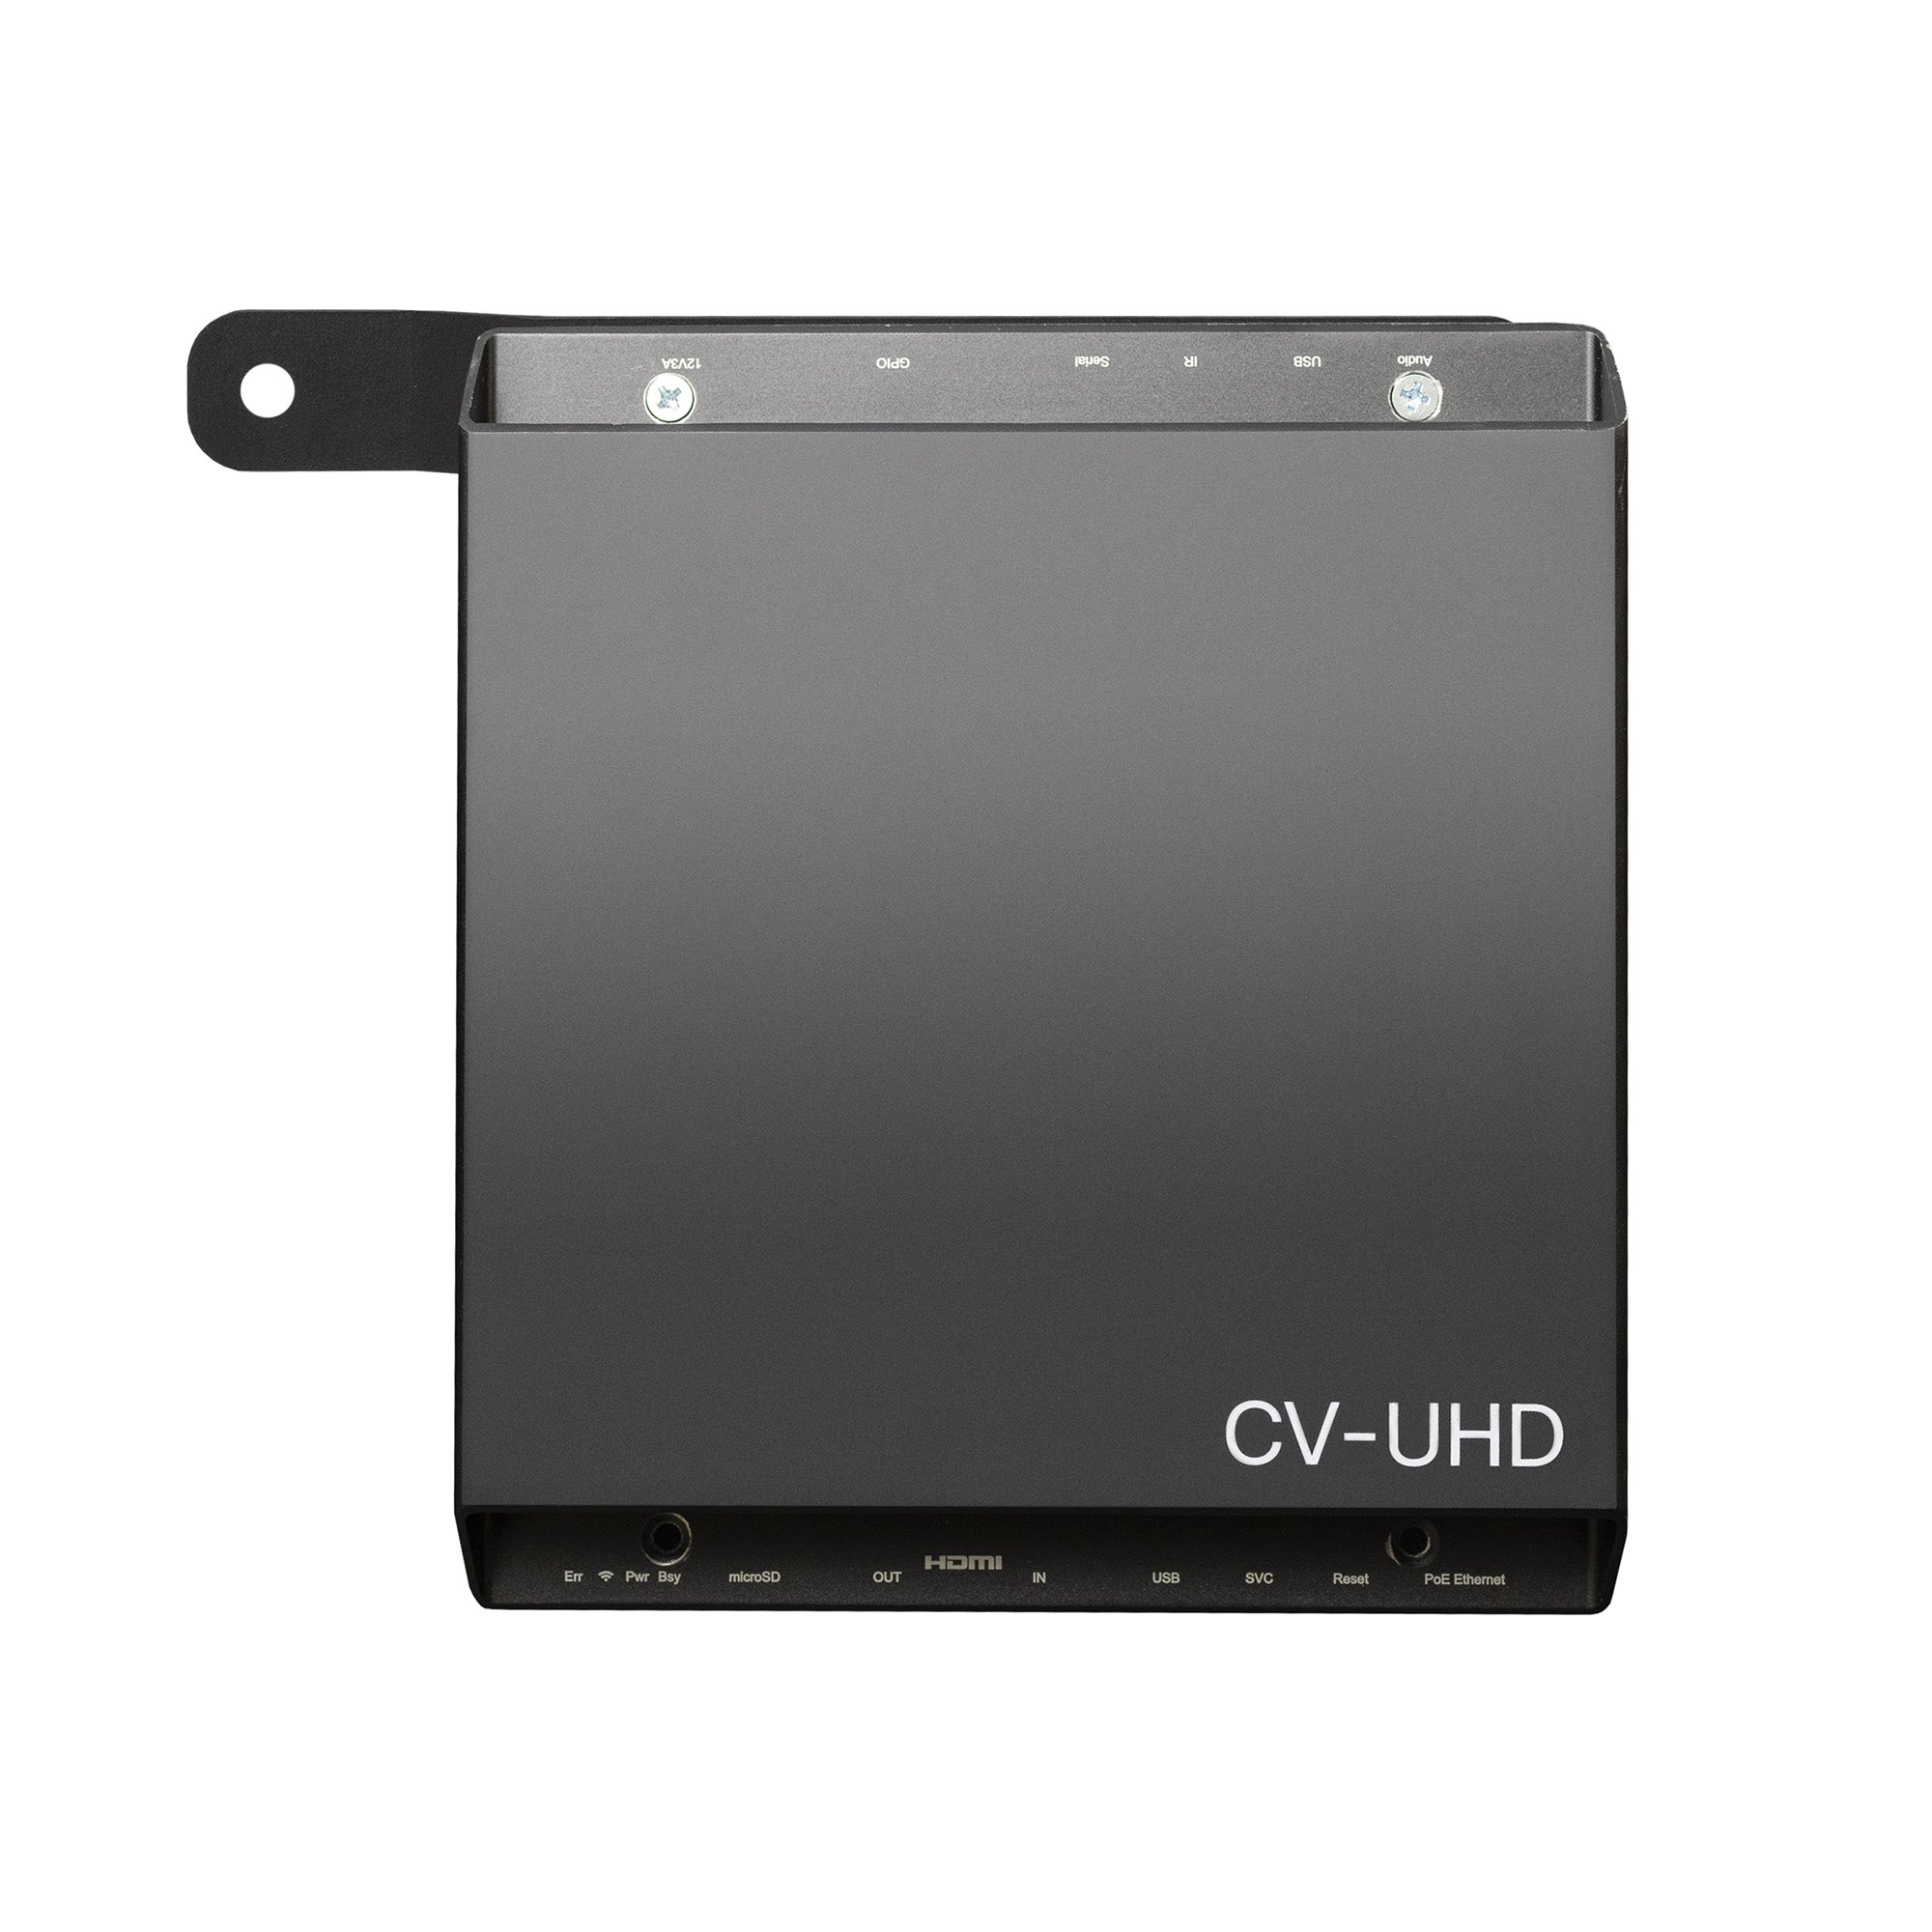  Cisco Vision CV-UHD media player shown mounted to the HIDEit CV-UHD VESA Mount Adapter Bar.